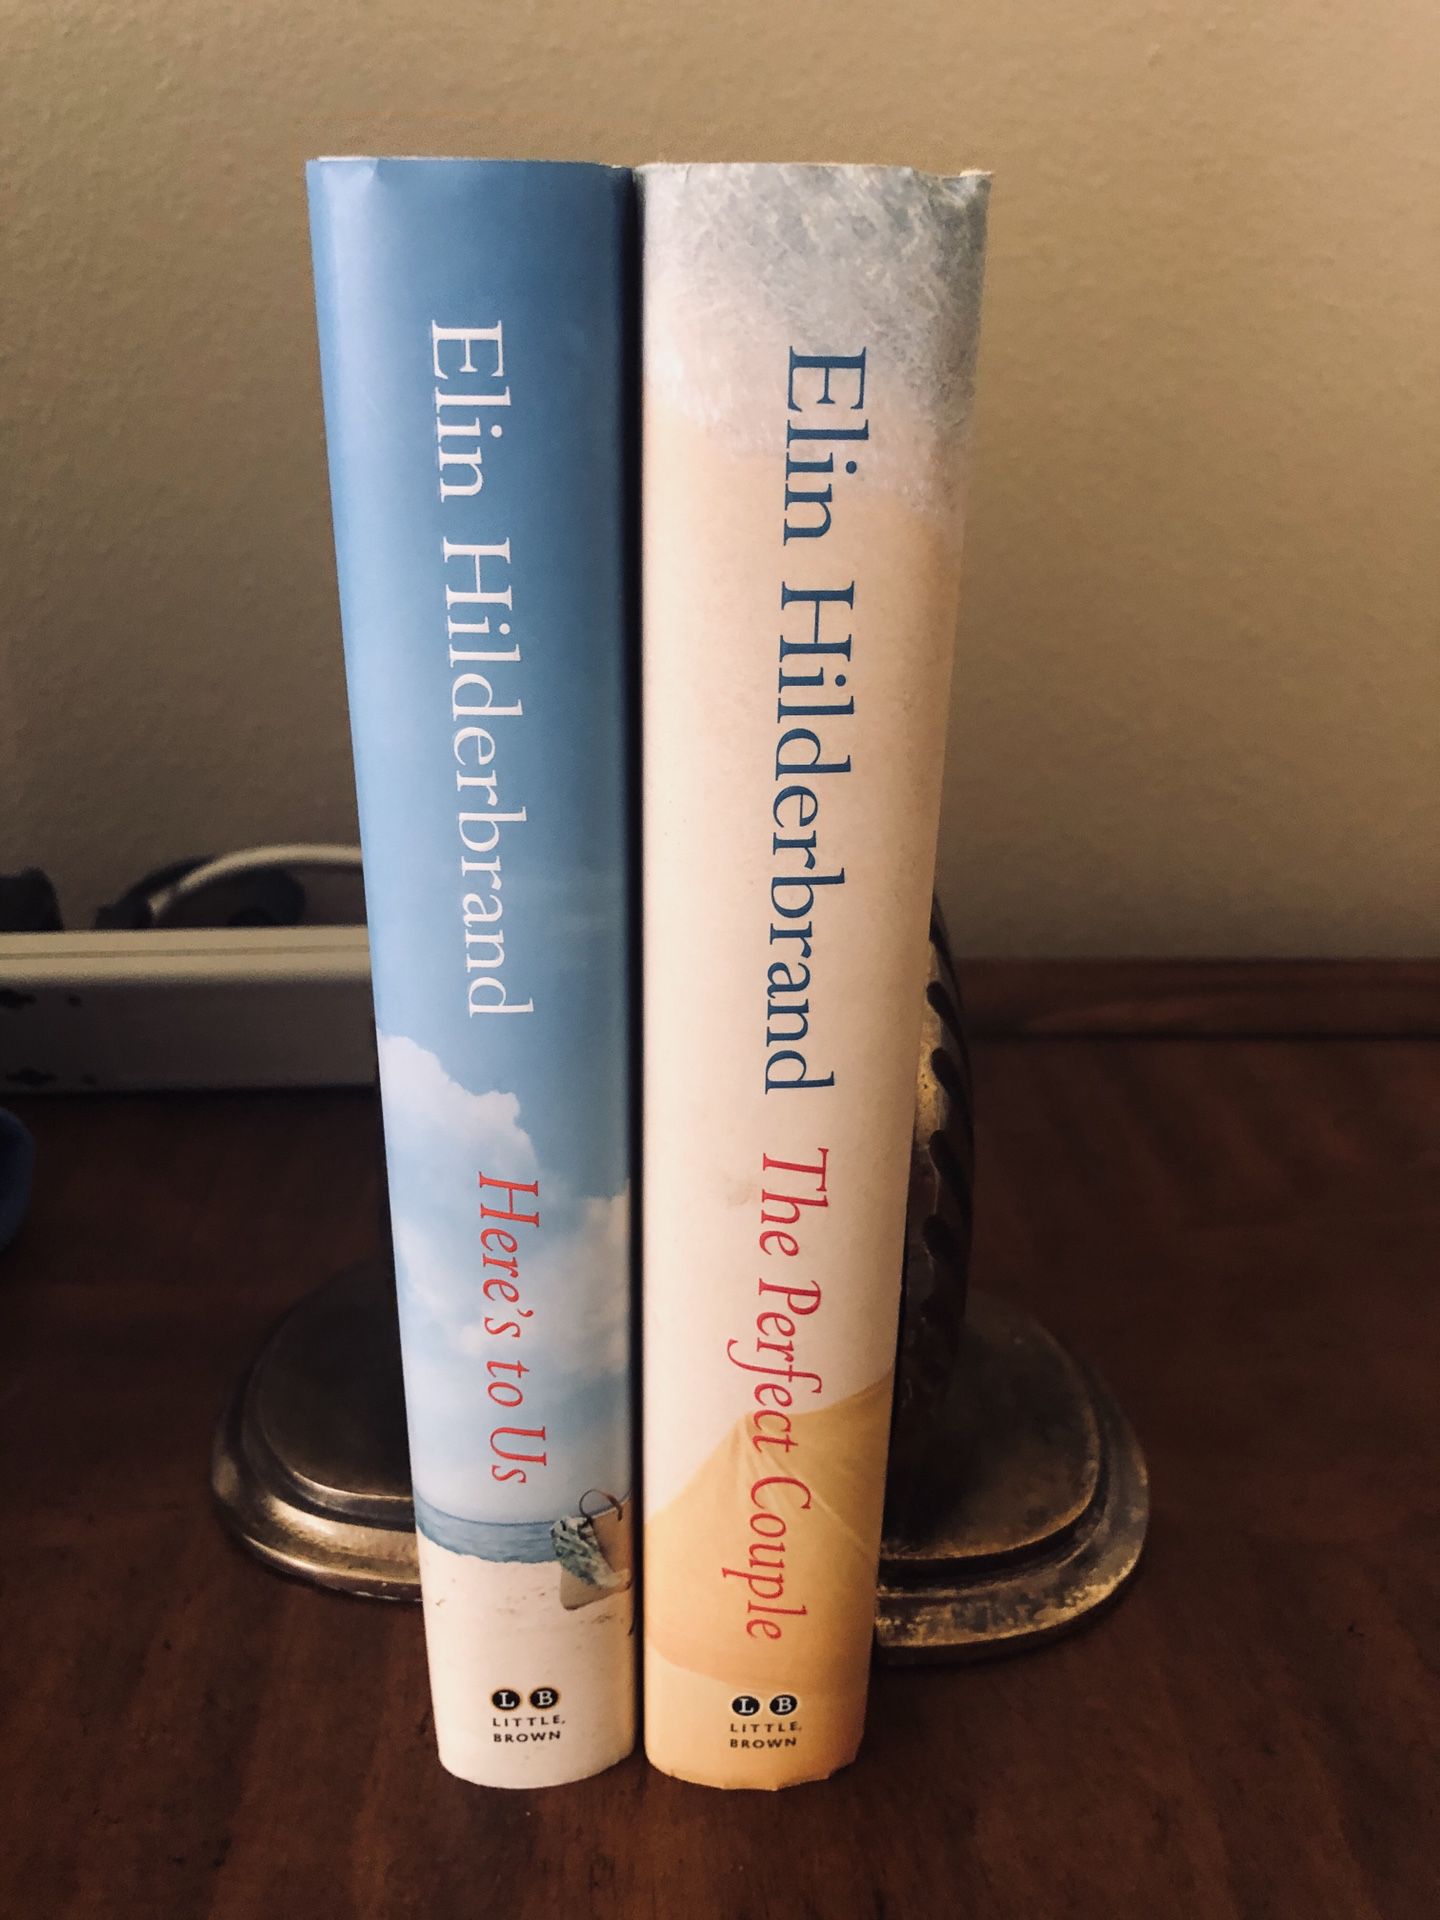 2 books by Elin Hilderbrand